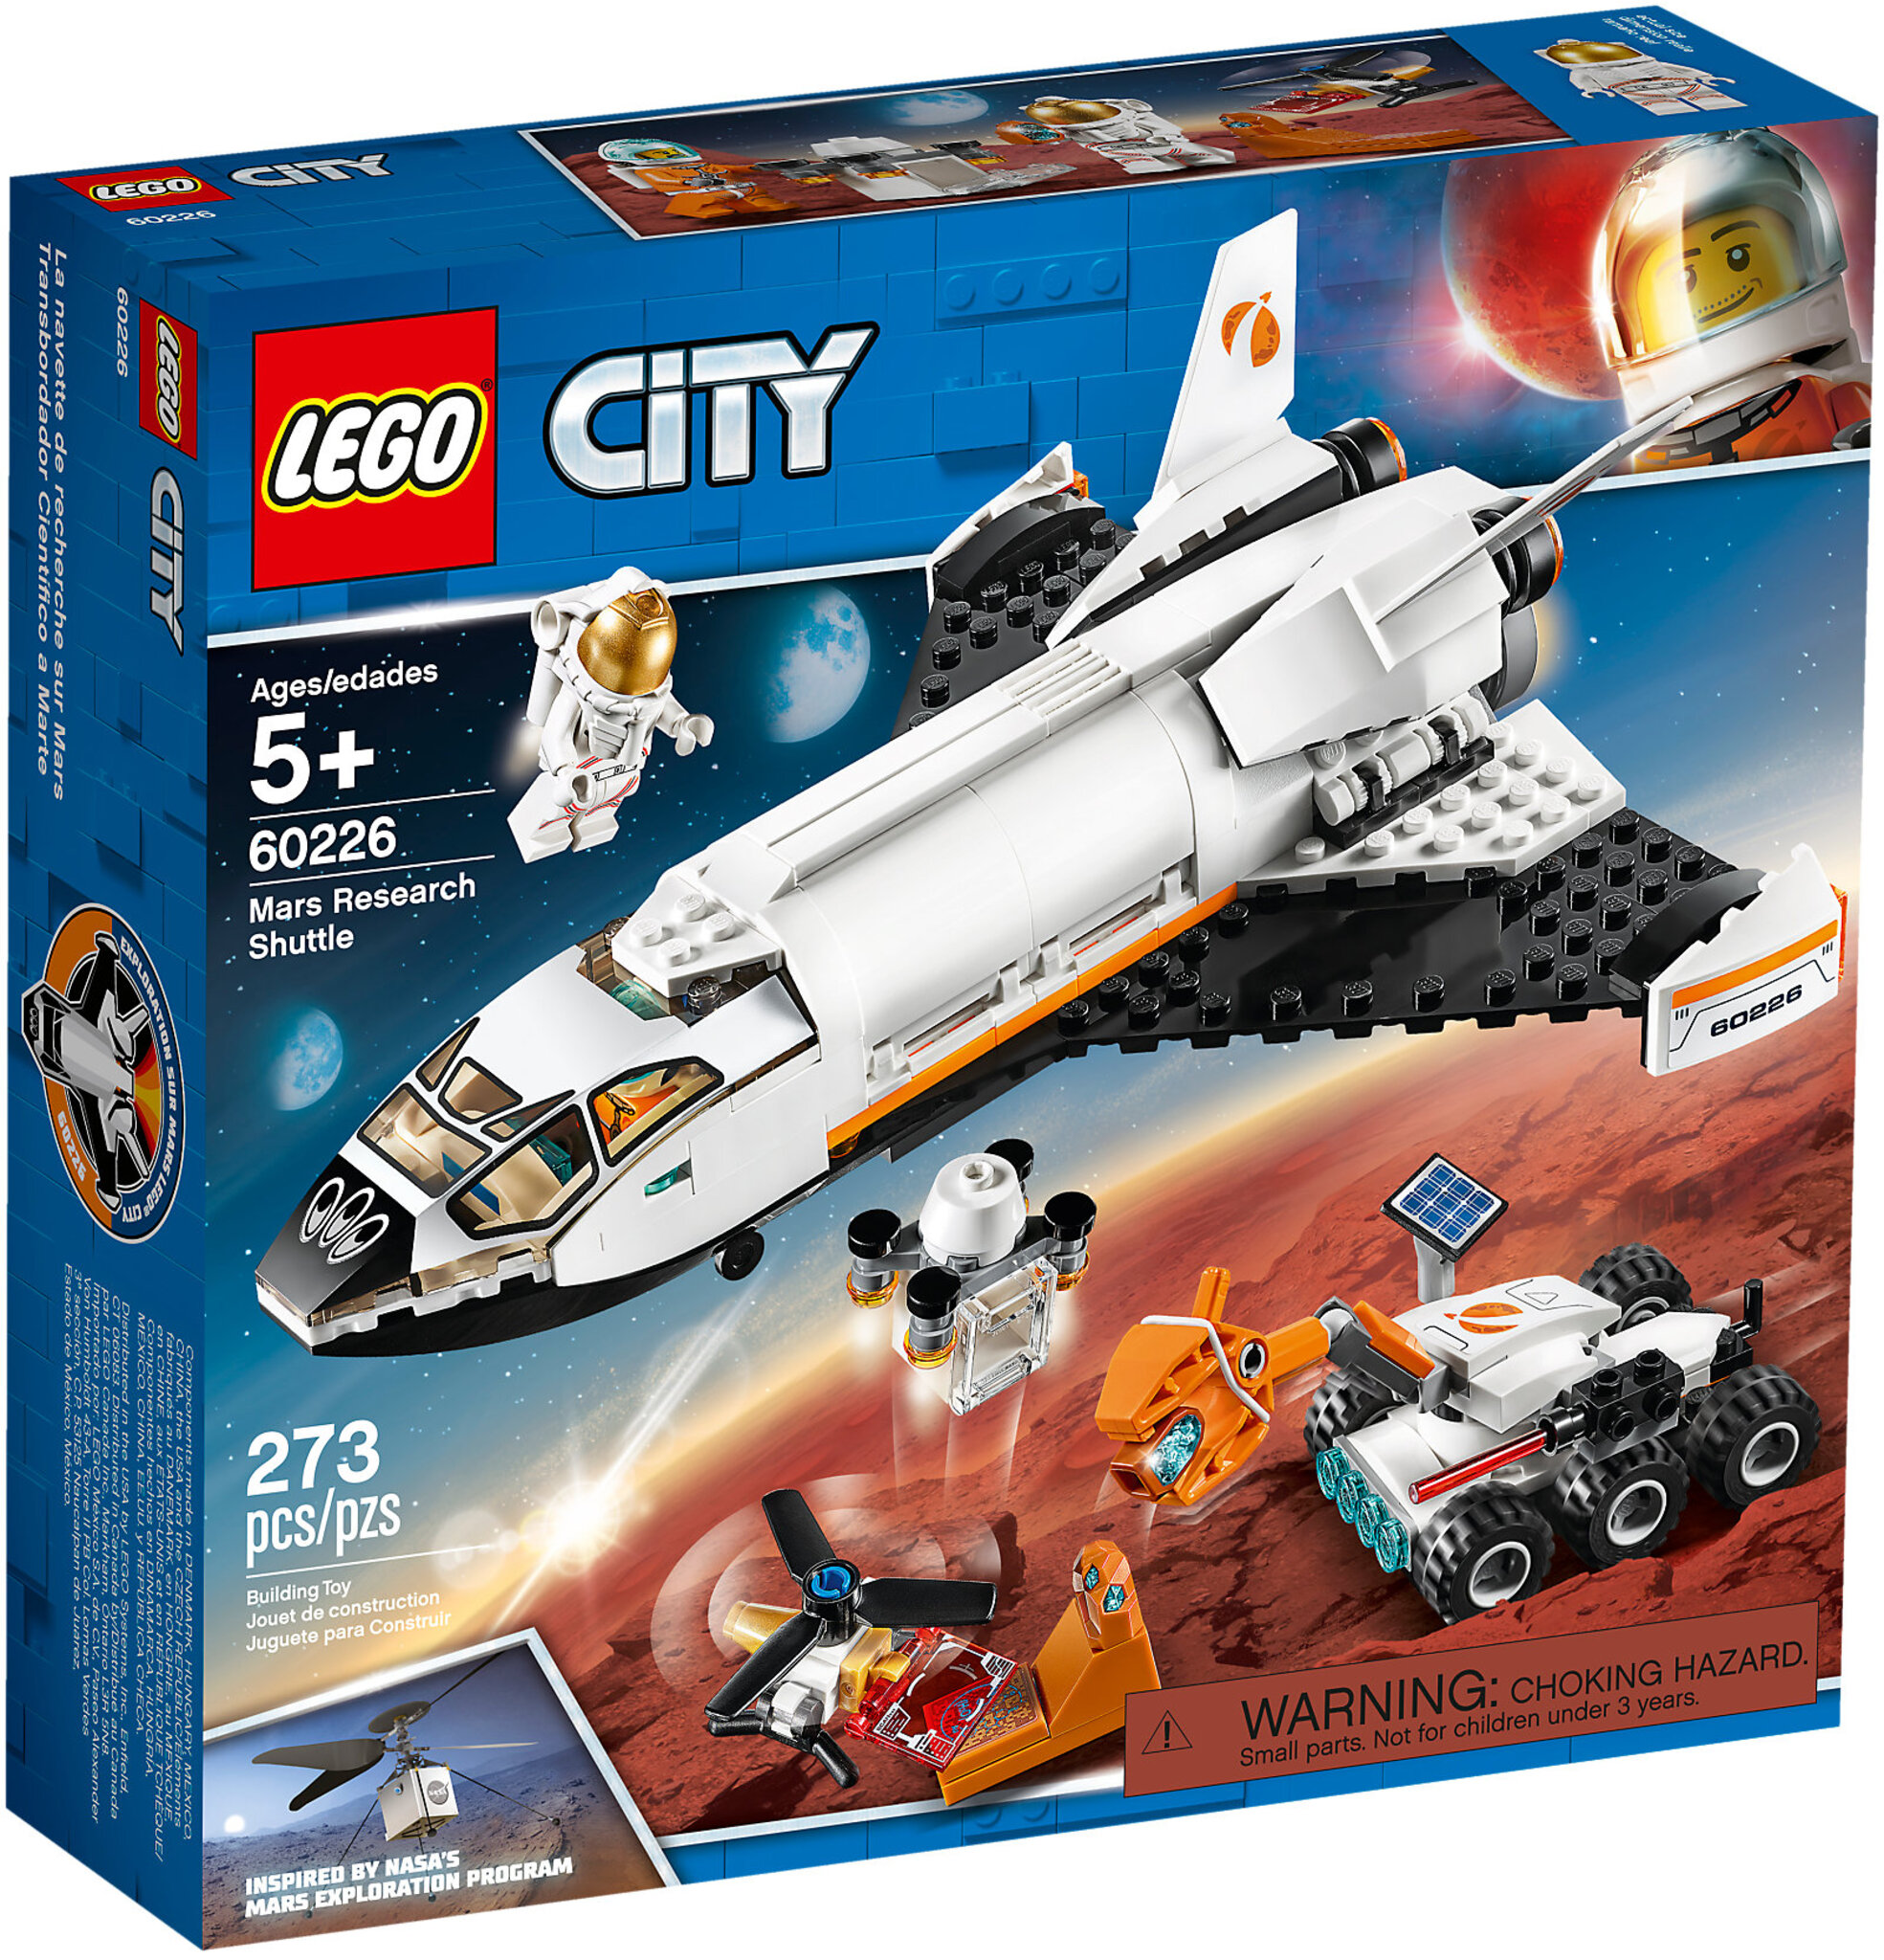 SHUTTLE DI RICERCA SU MARTE LEGO CITY SPACE PORT 60226